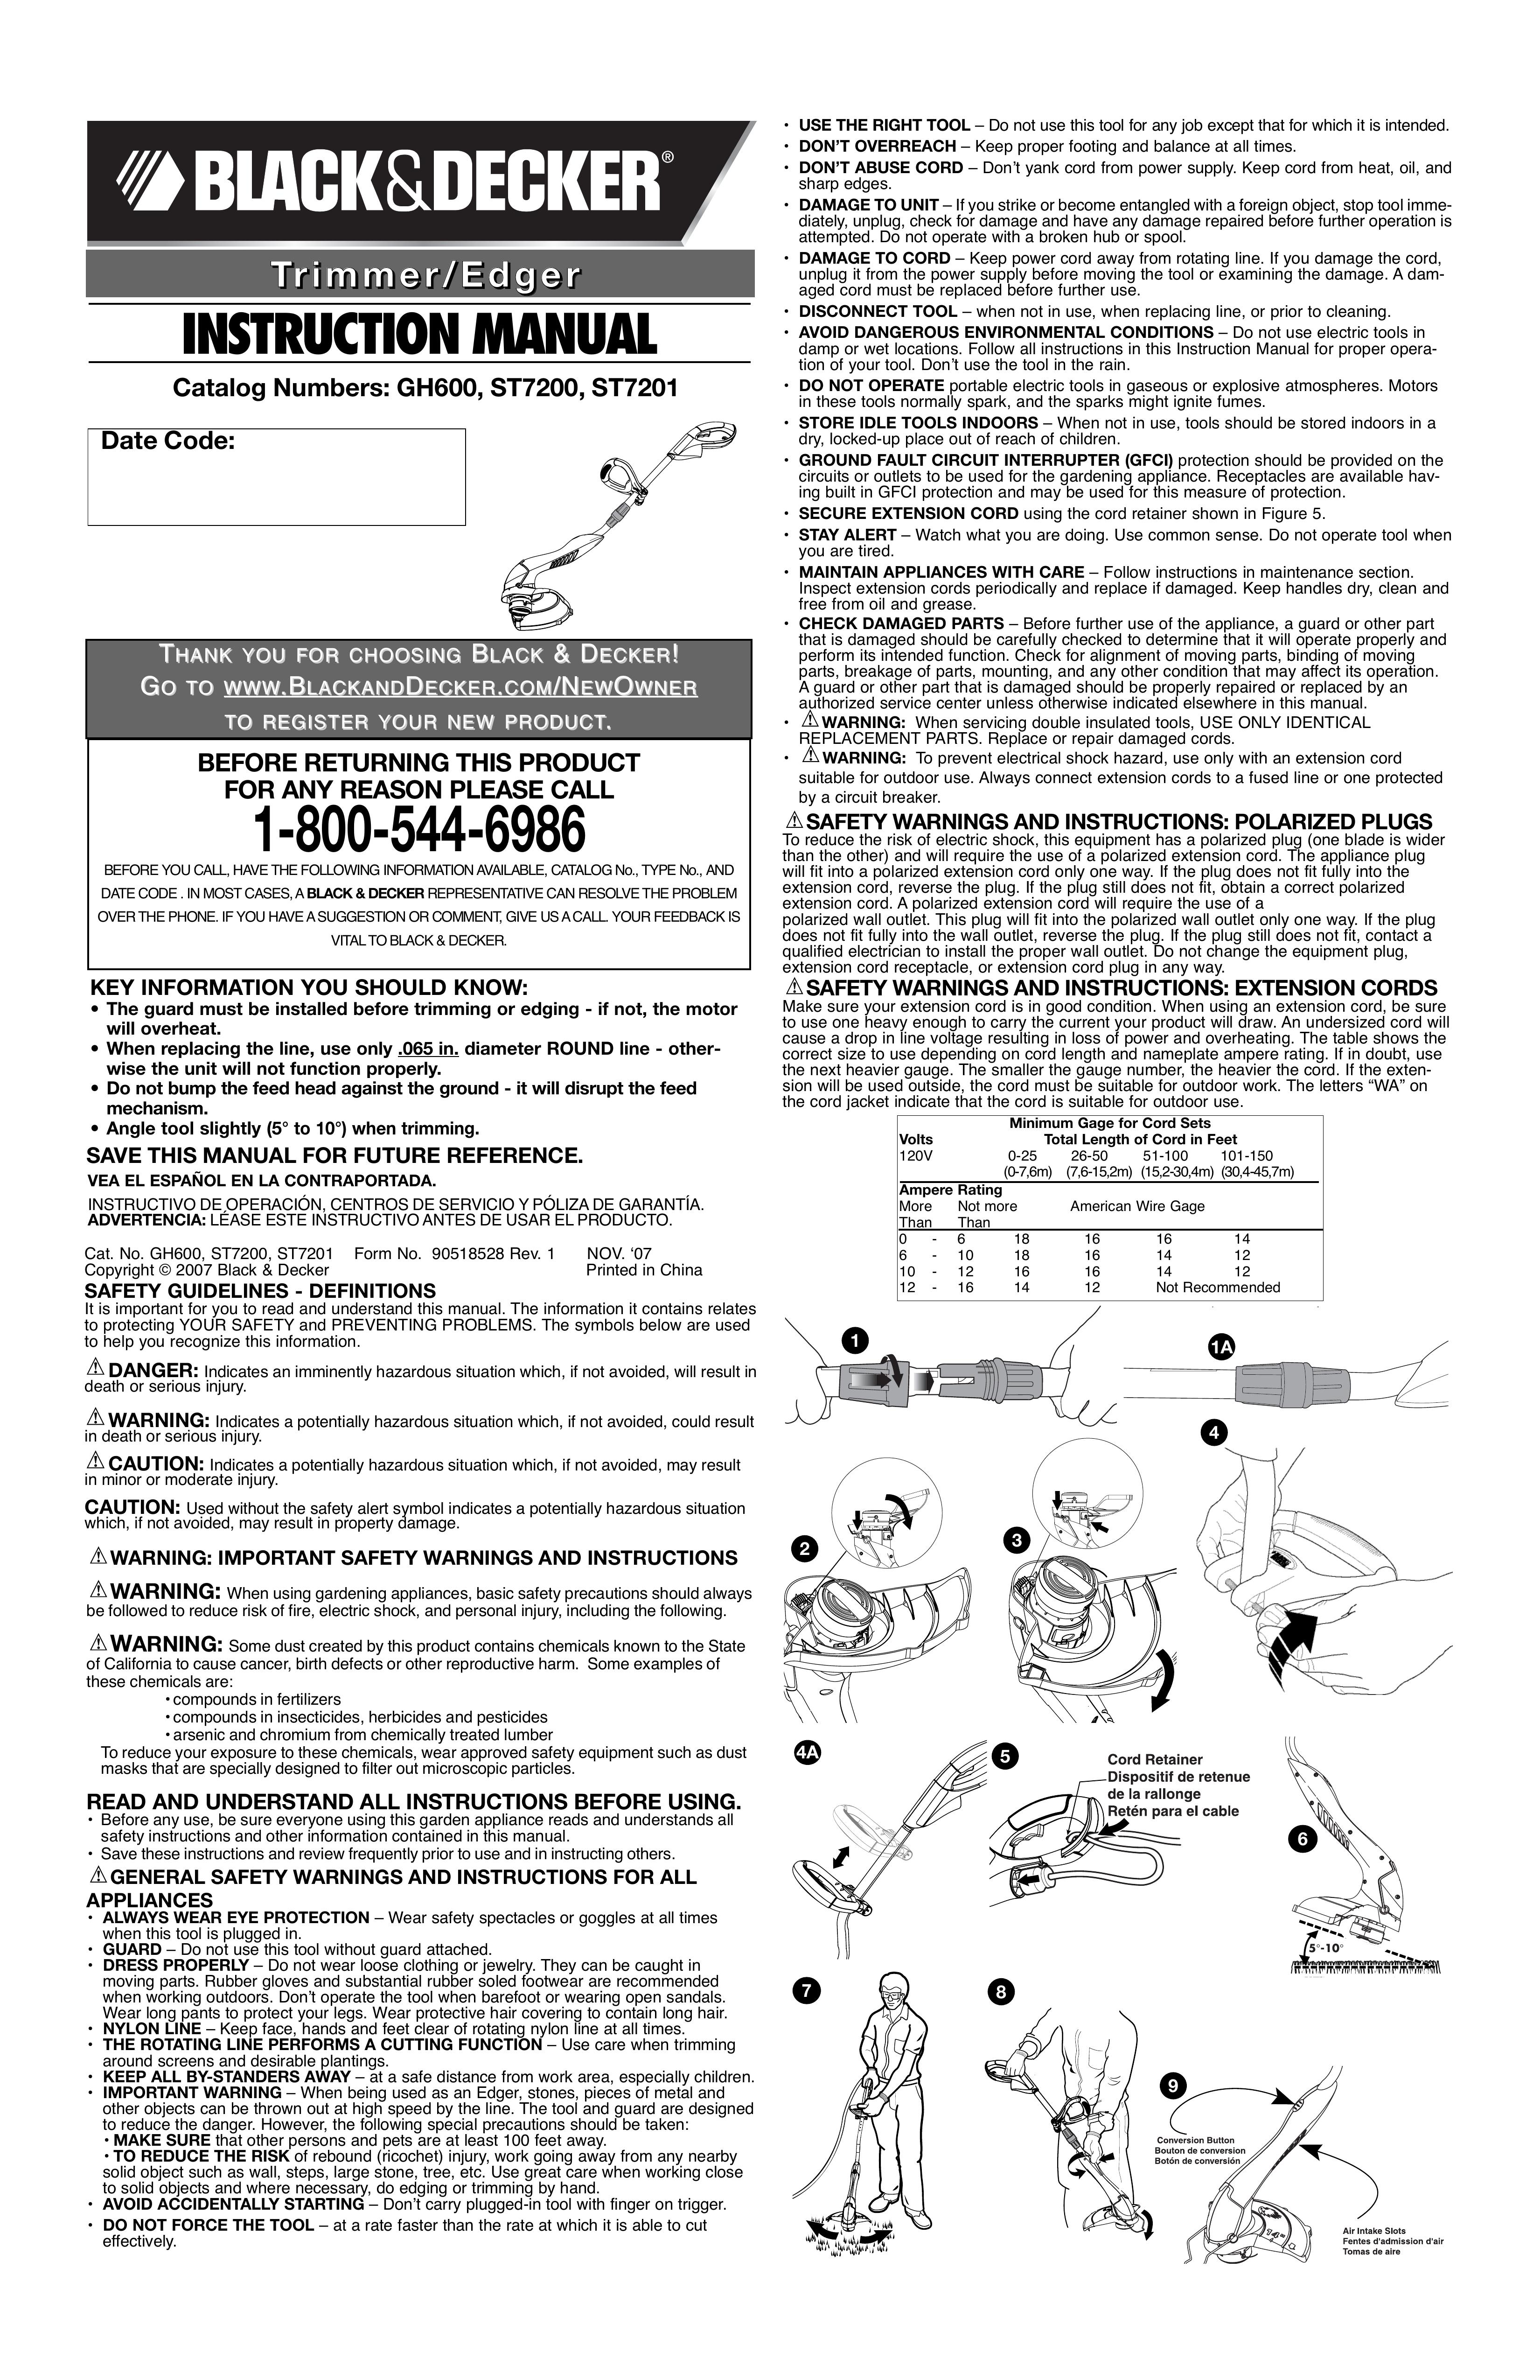 Black & Decker 90518528 Trimmer User Manual